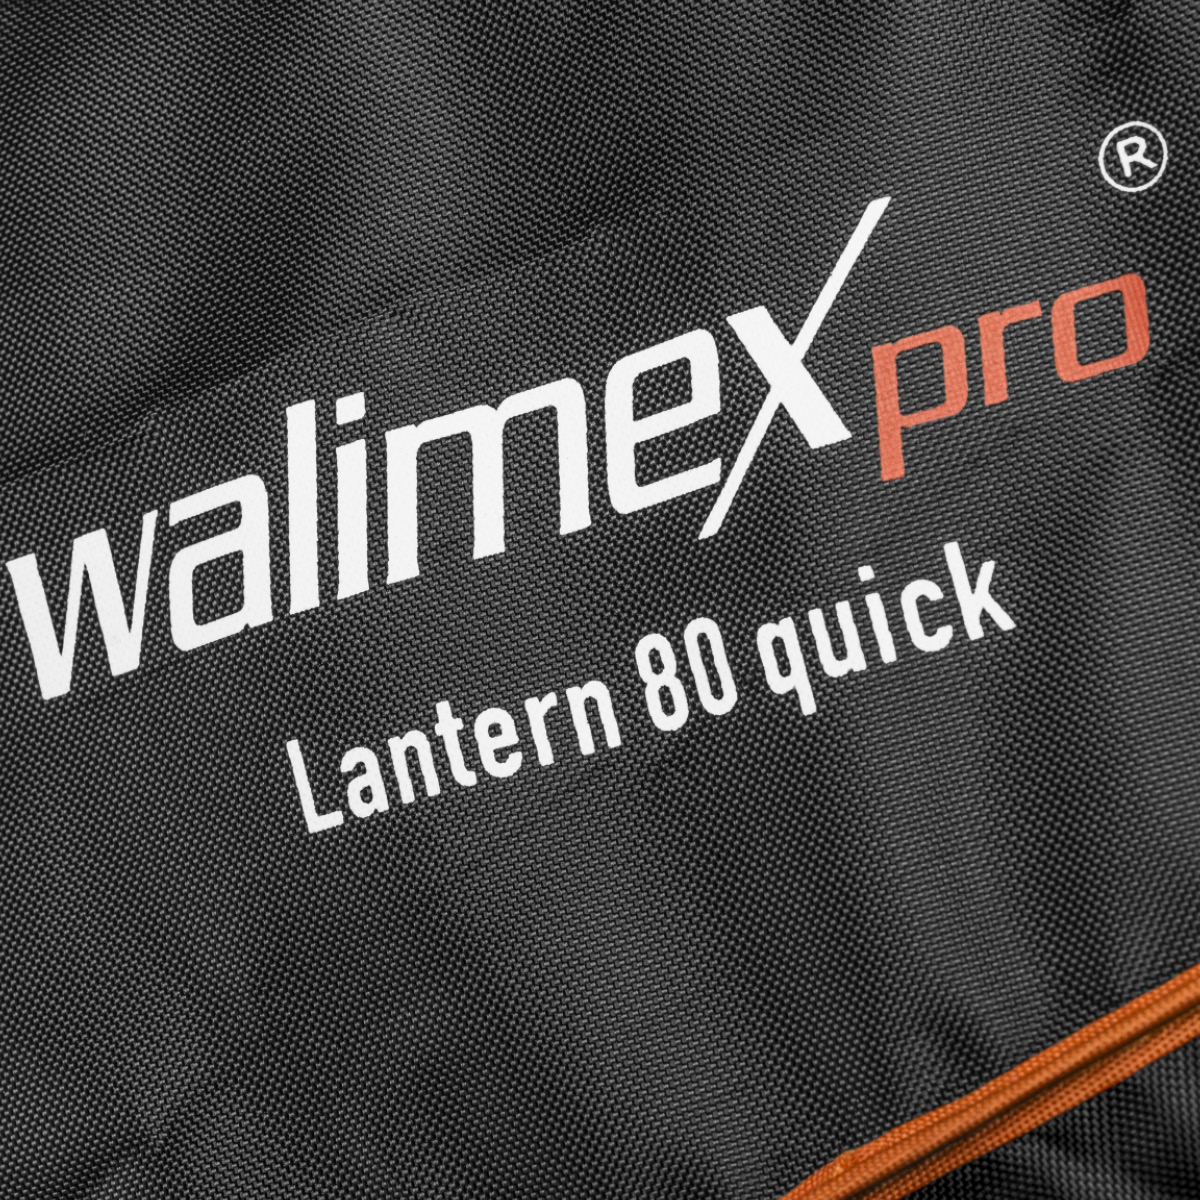 Walimex pro 360° Ambient Light Softbox 80 Walimex C&CR